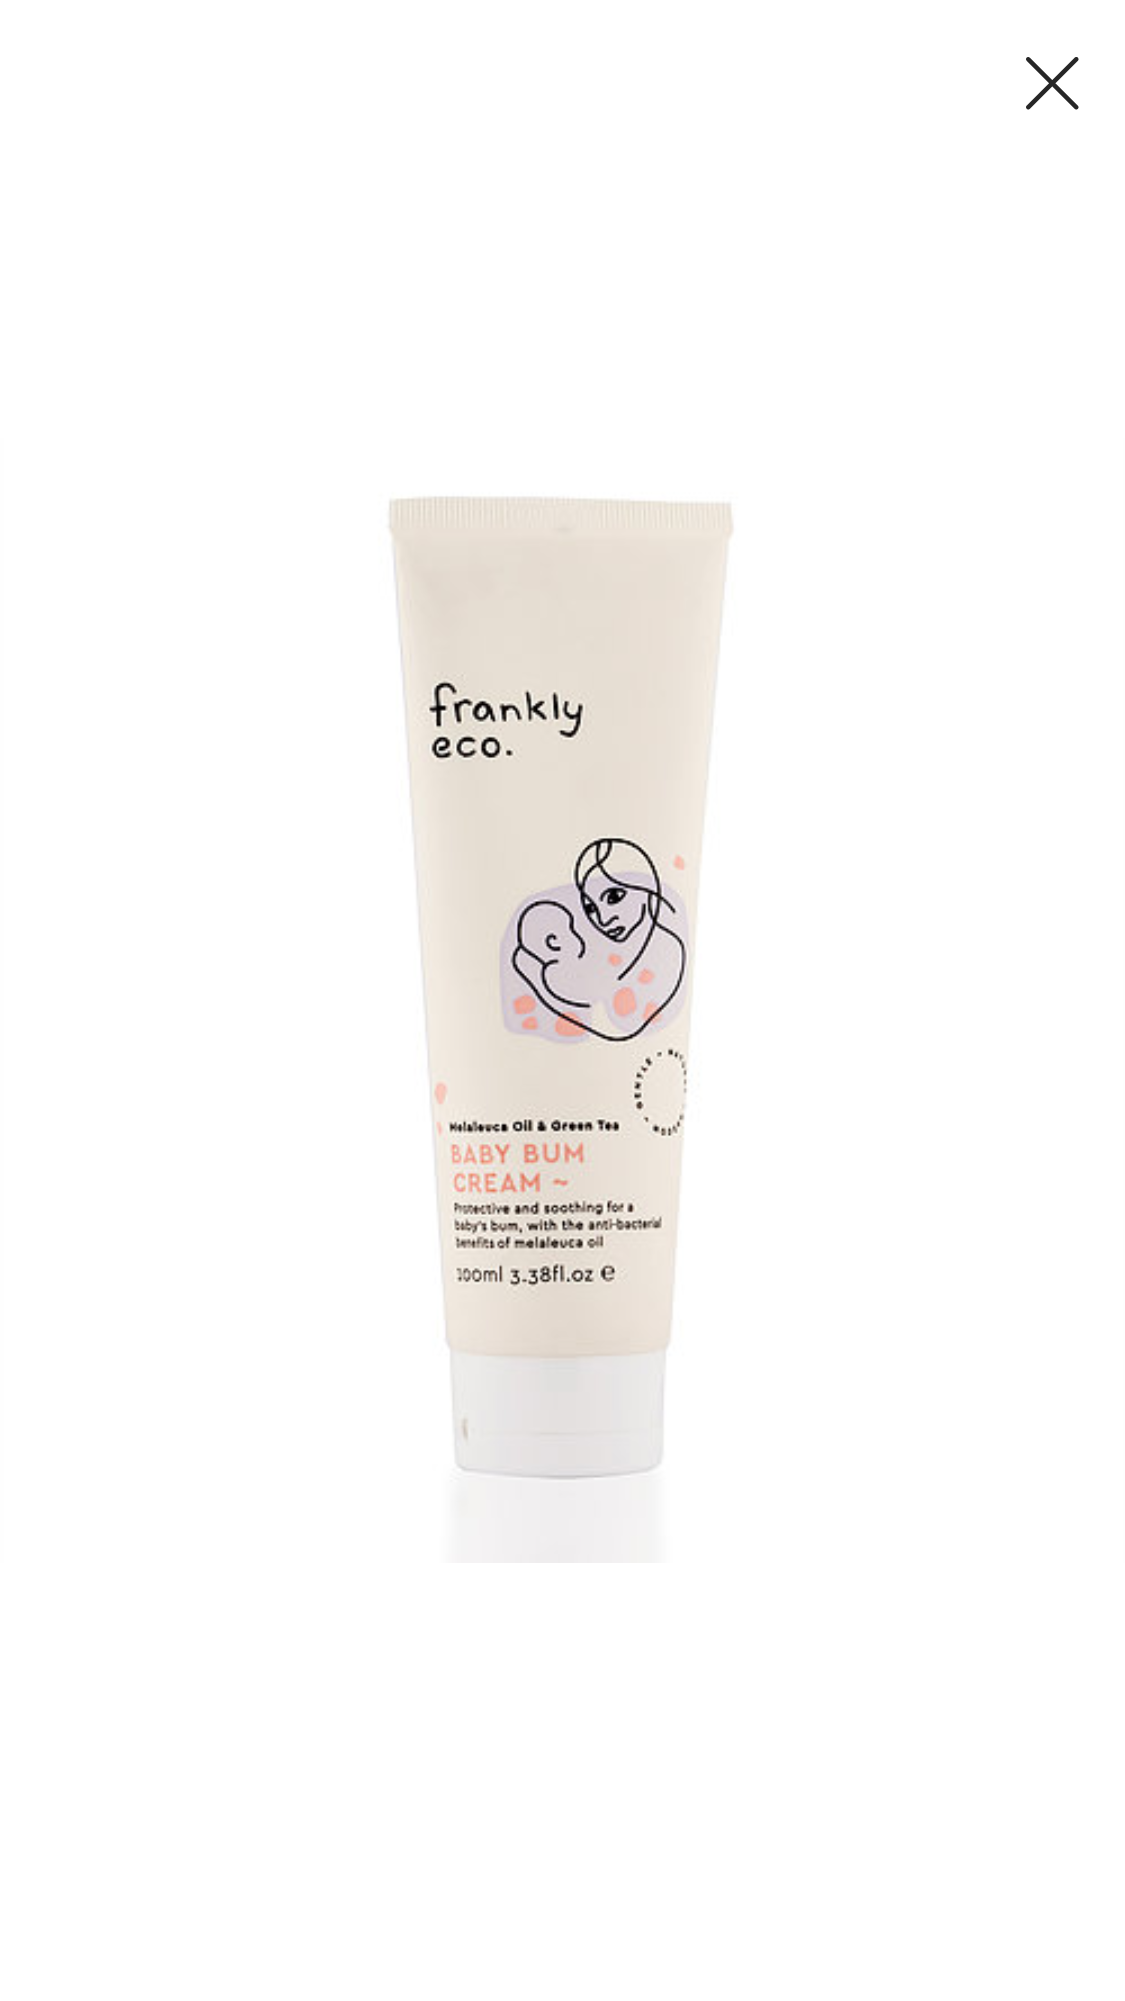 Frankly Eco Baby Bum Cream 120mL $24 each